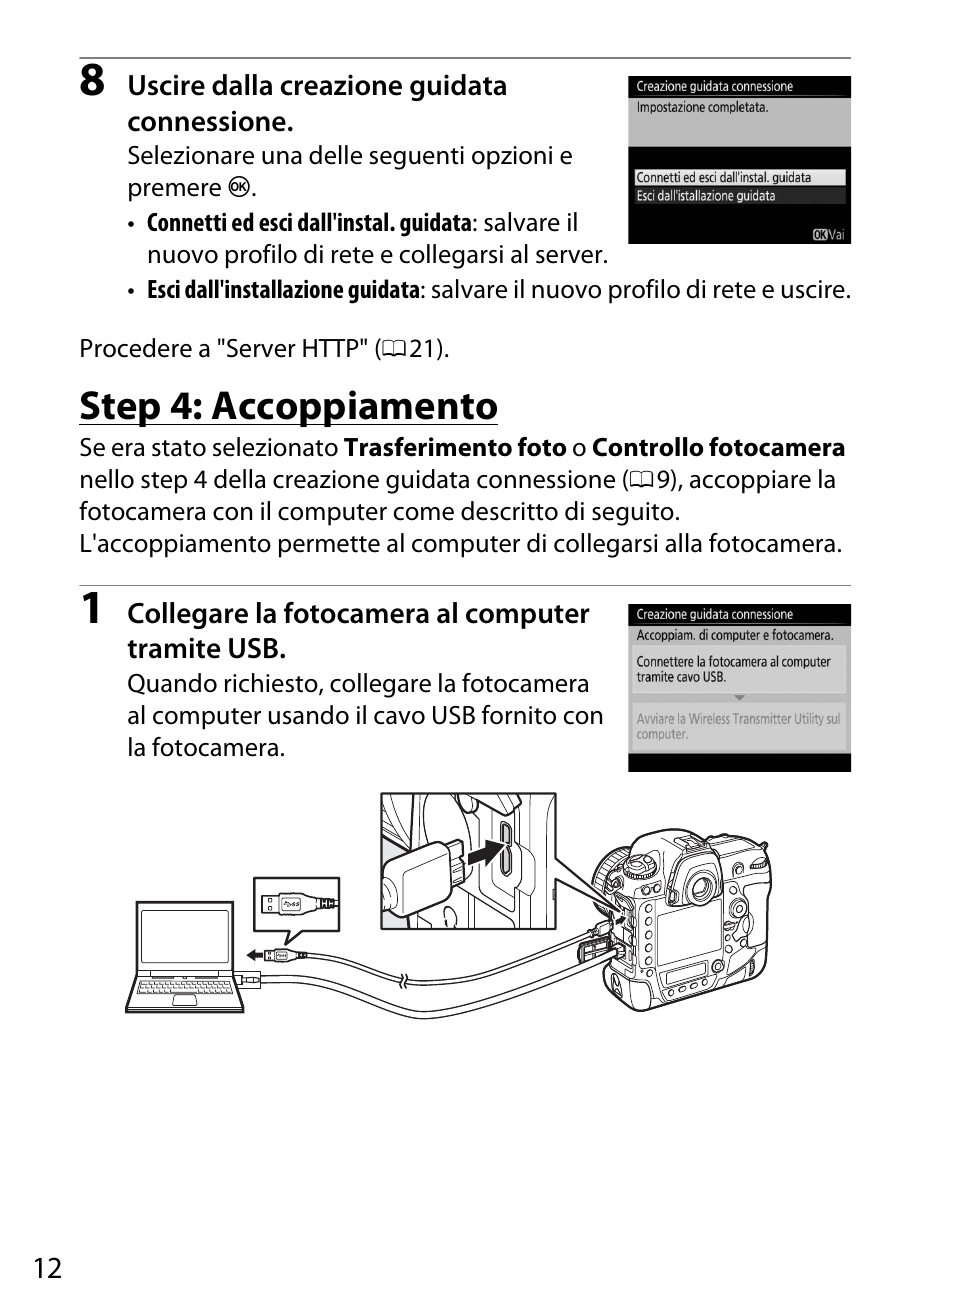 Step 4: accoppiamento | Nikon D5 Manuale d'uso | Pagina 22 / 92